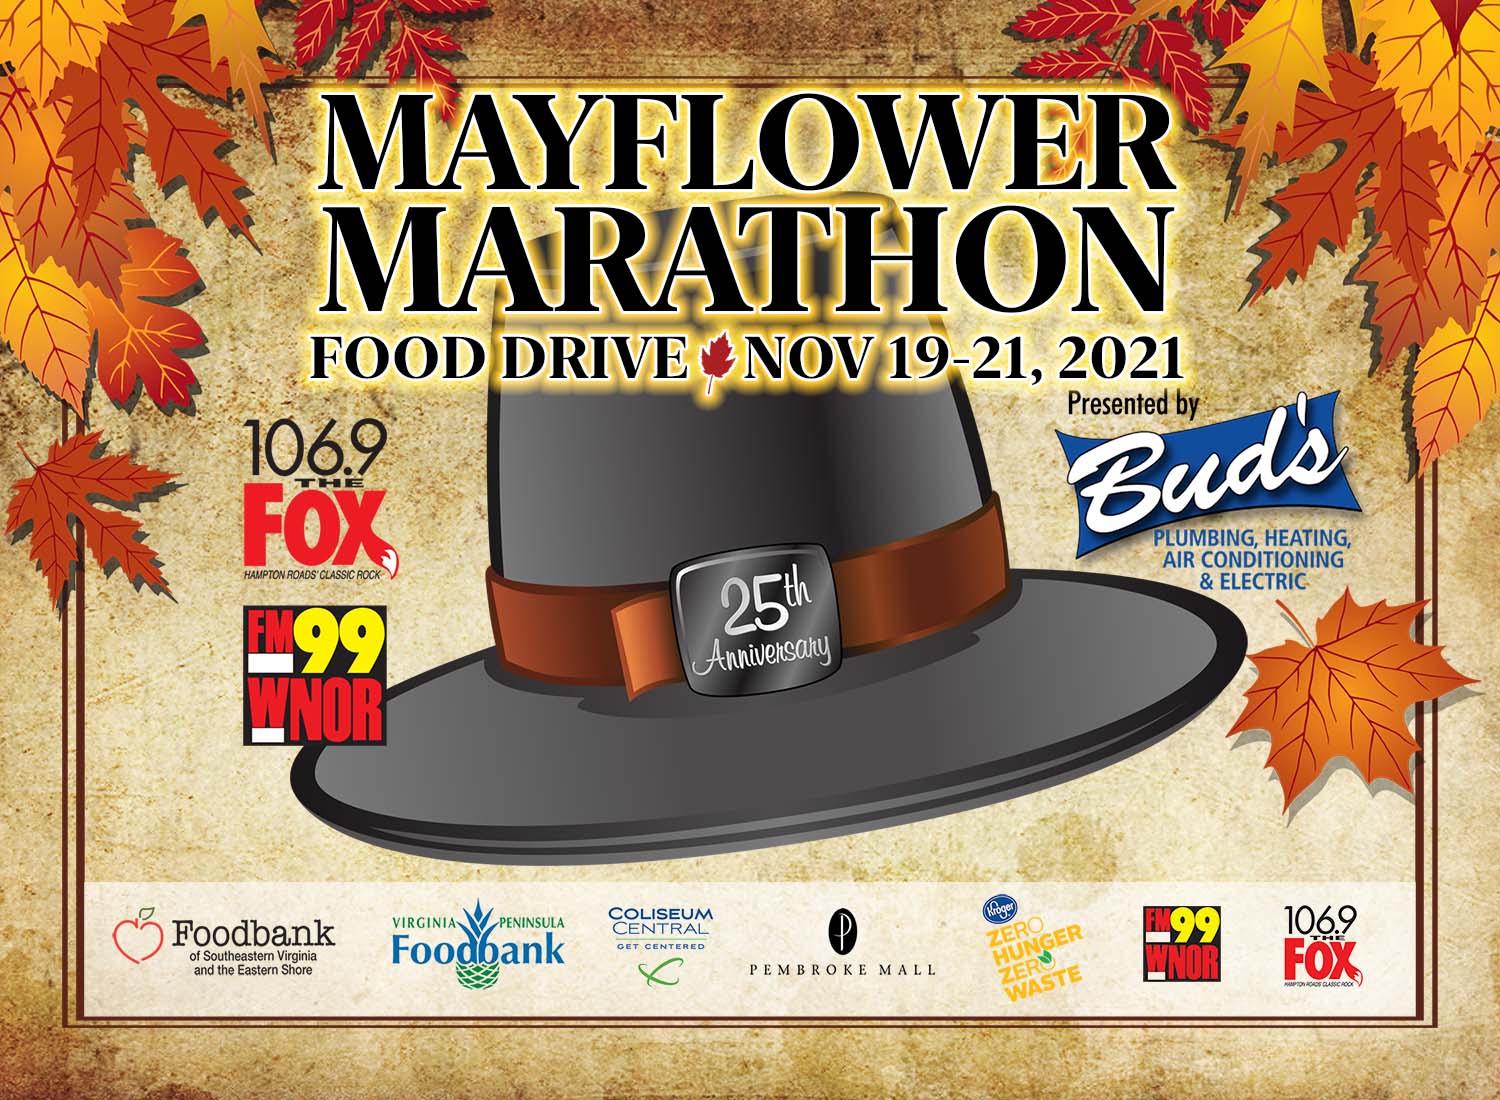 Mayflower Marathon Virginia Peninsula Foodbank